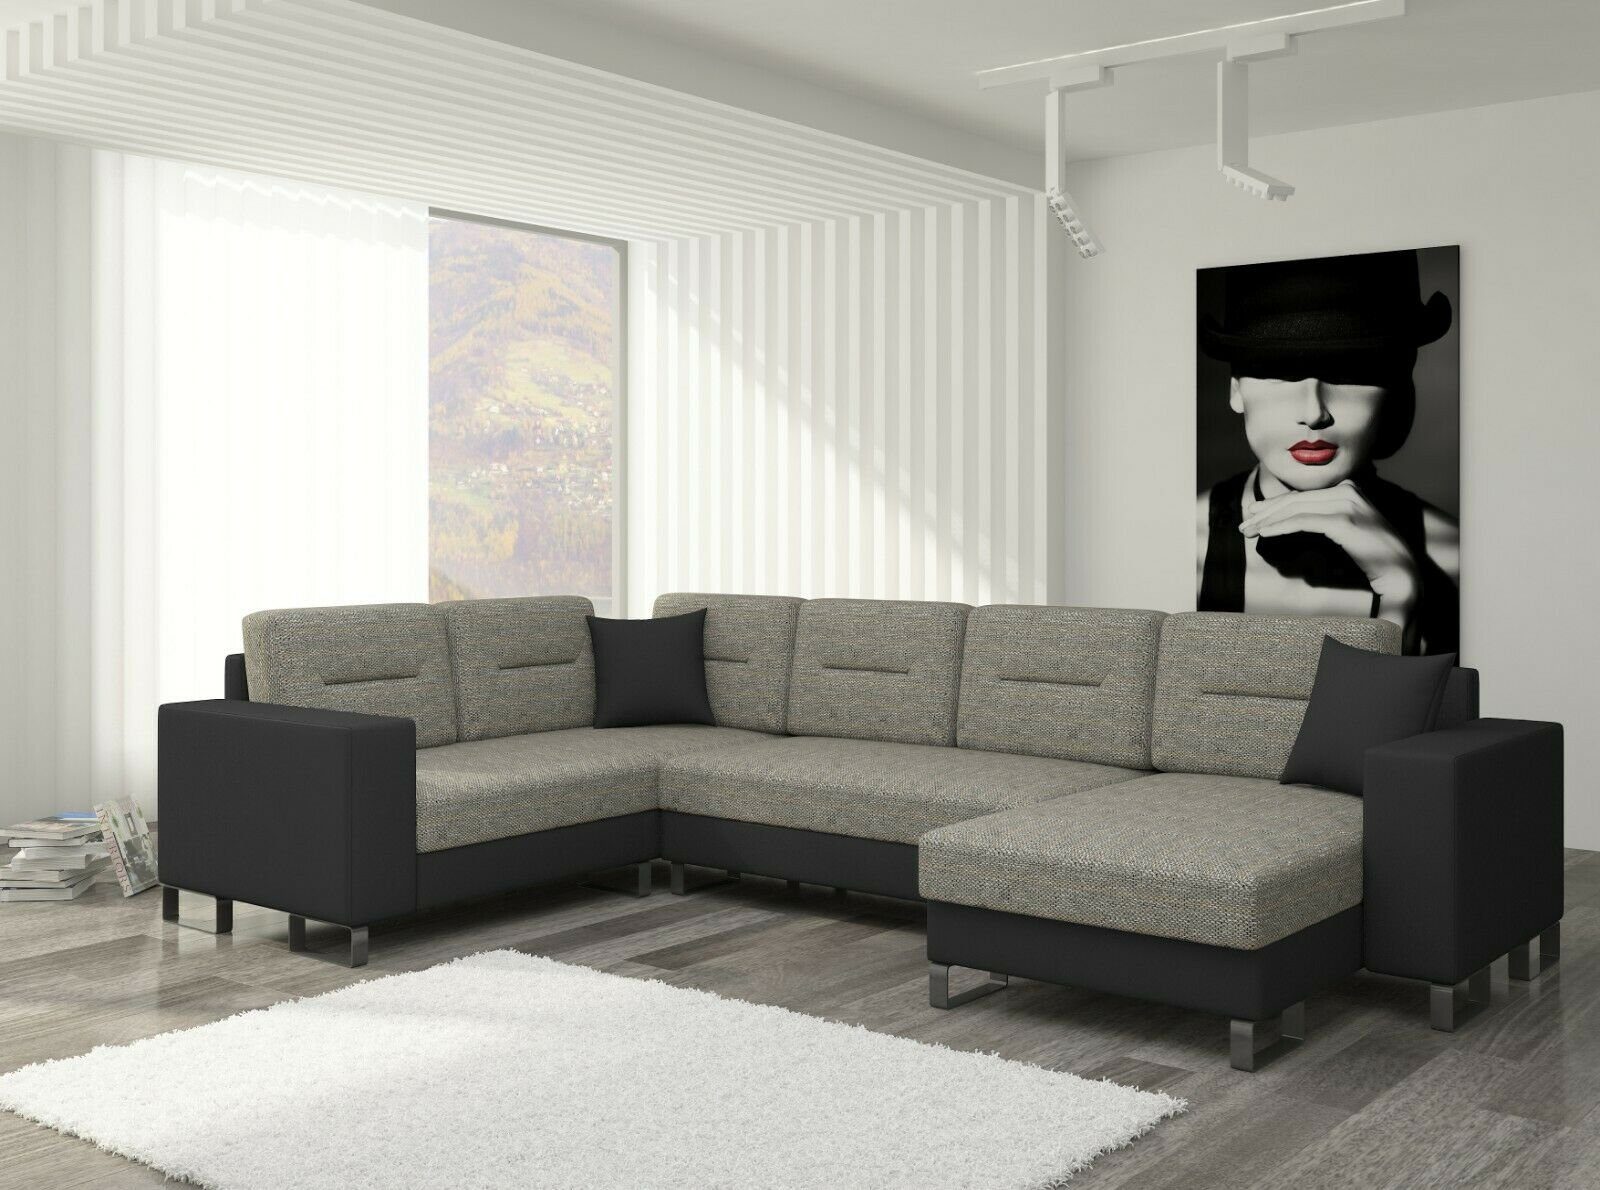 JVmoebel Ecksofa Design Ecksofa Schlafsofa Bettfunktion Couch Leder Polster Textil, Mit Bettfunktion Hellgrau/Dunkelgrau | Ecksofas